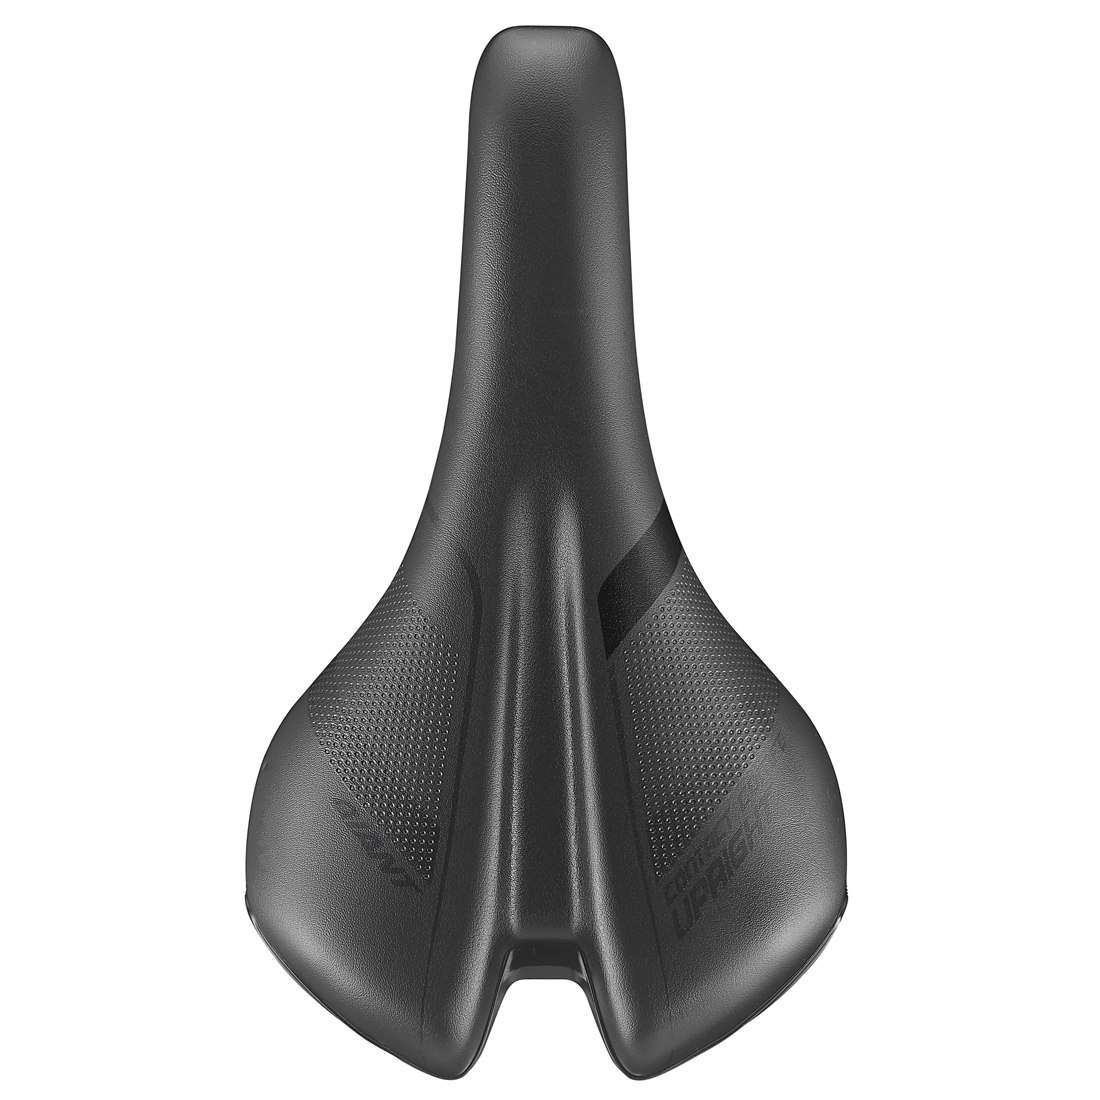 Produktbild von Giant Contact Comfort Saddle - Upright - Sattel - black